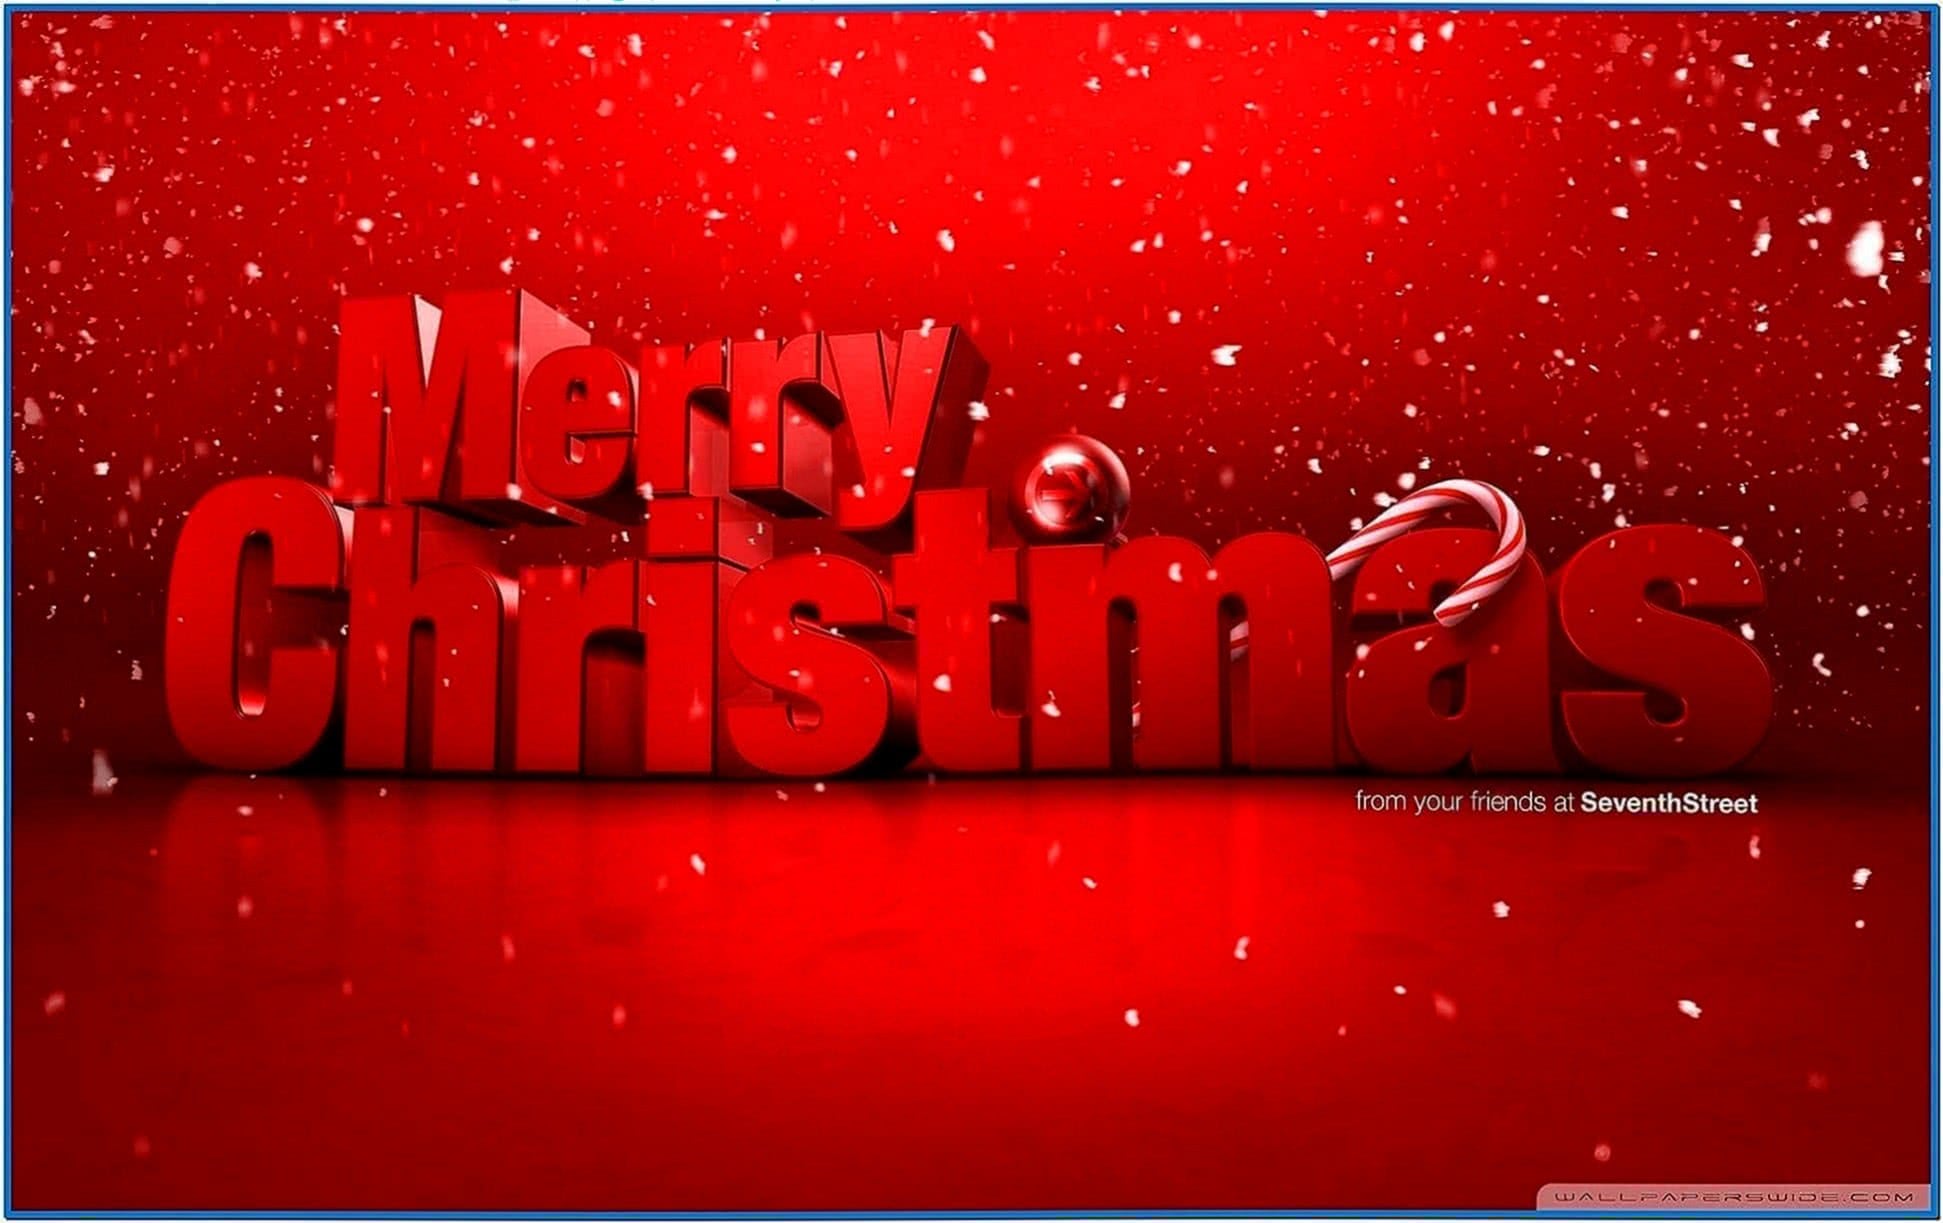 http://download-screensavers.biz/images/merry-christmas-screensaver-windows-7-3.jpg